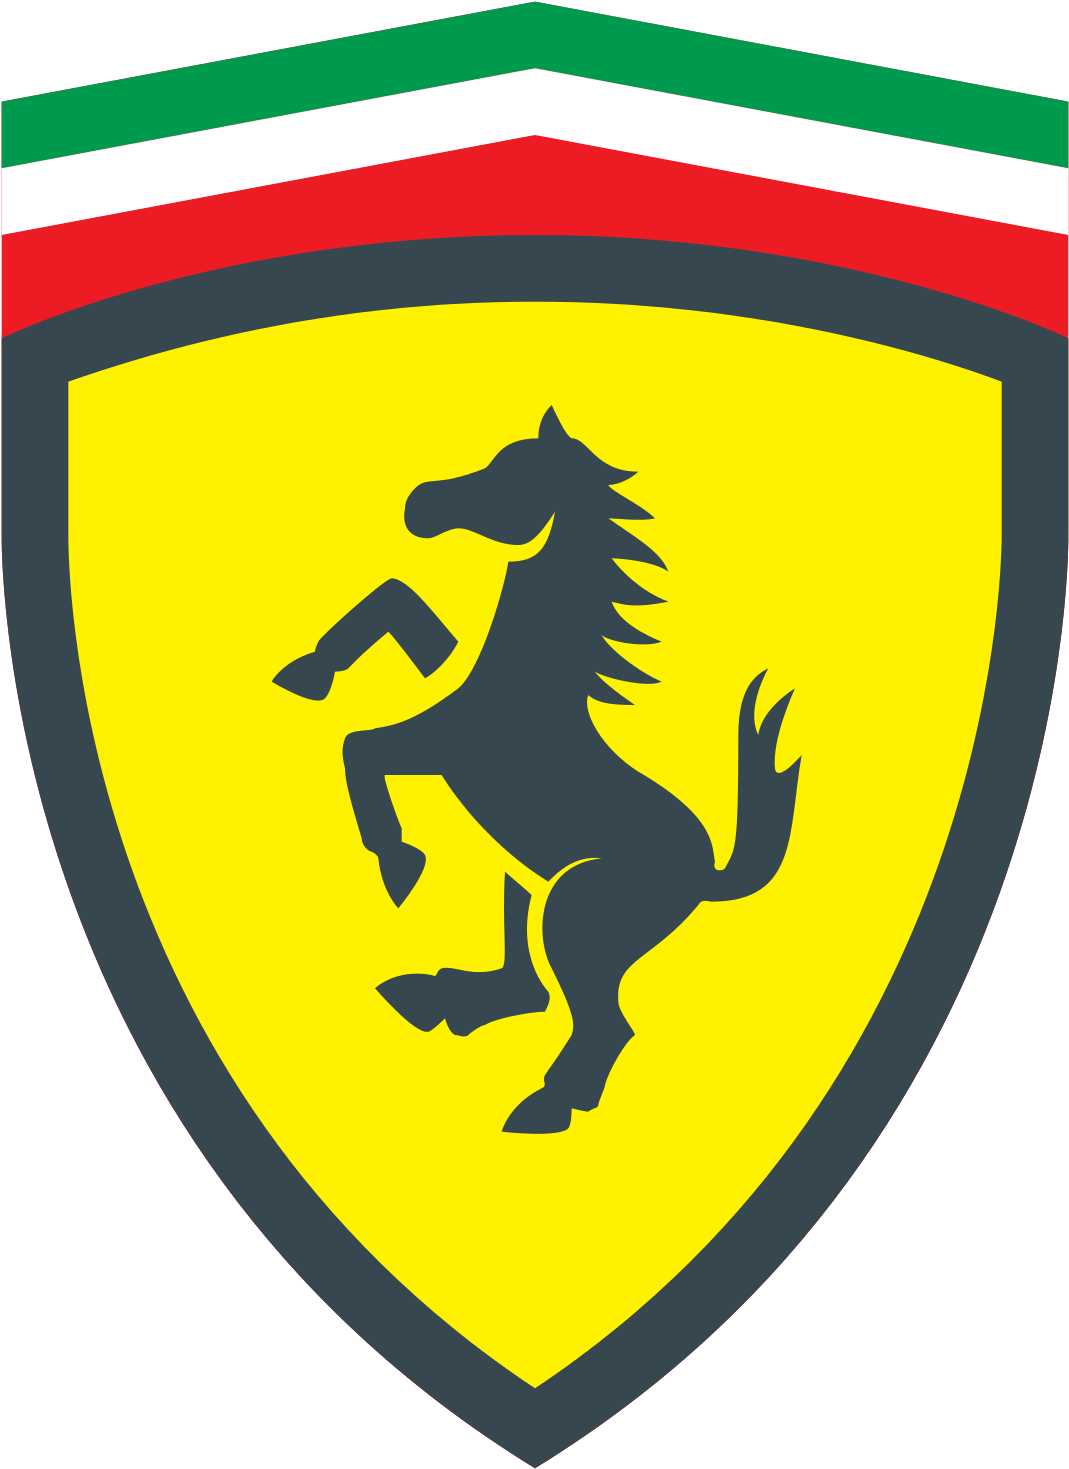 A Logo Of A Horse